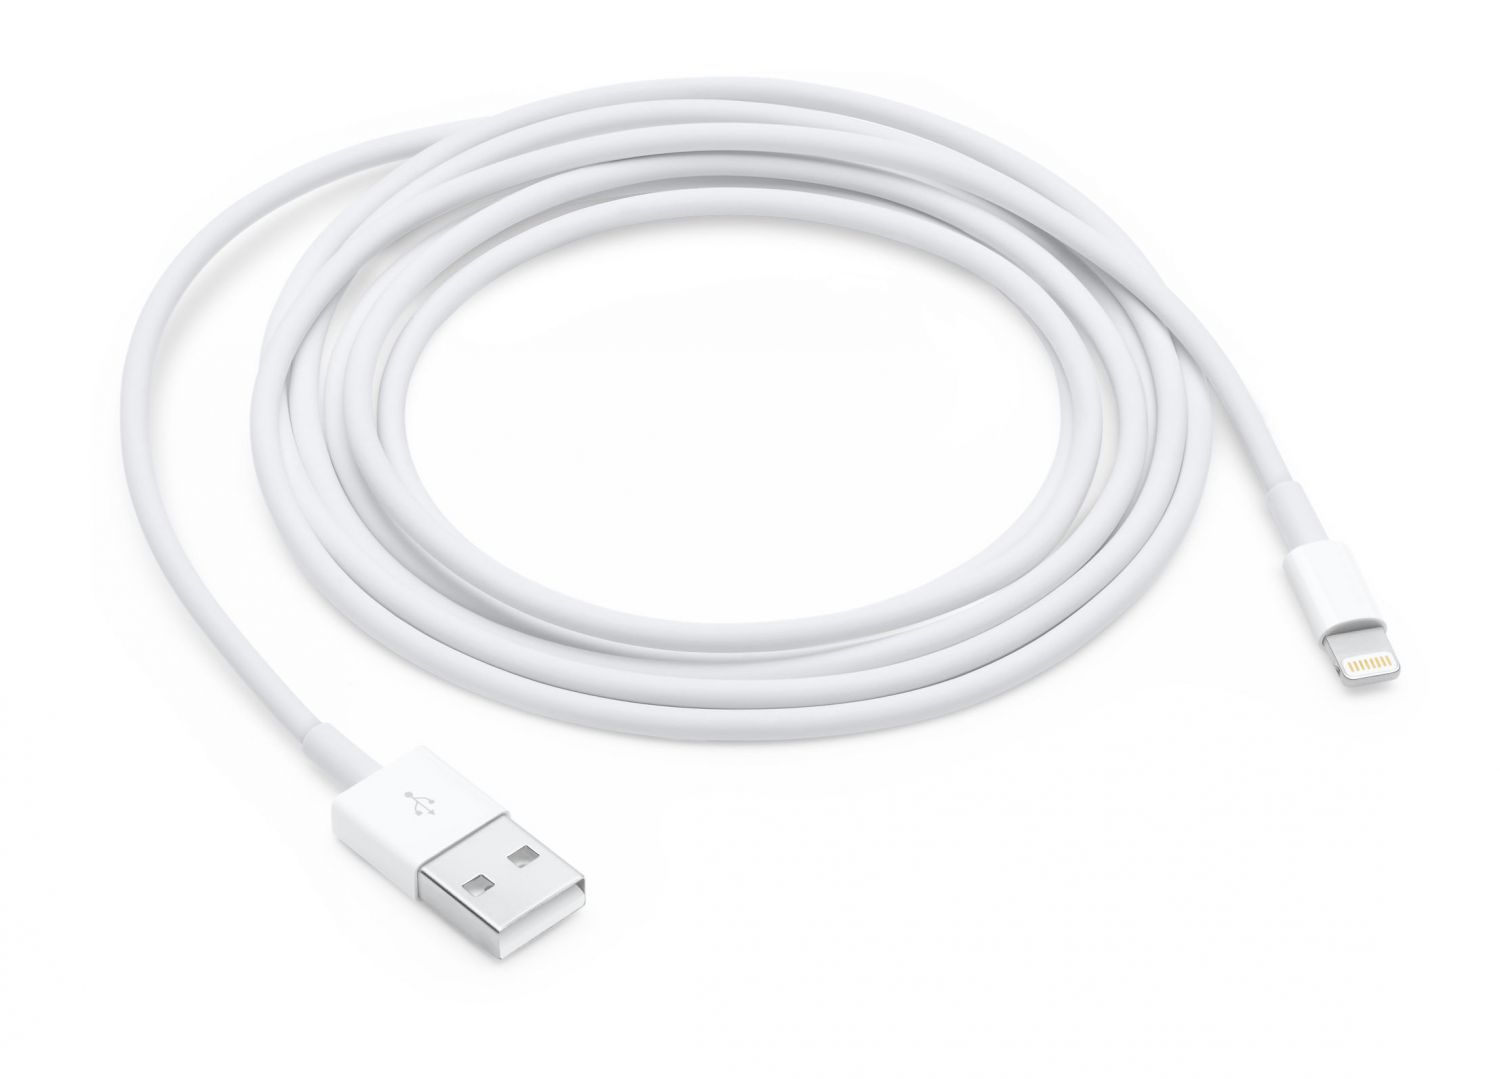 MD819ZM/A - Cable Apple Original Lightning-USB 2m Blanco (MD819ZM/A)